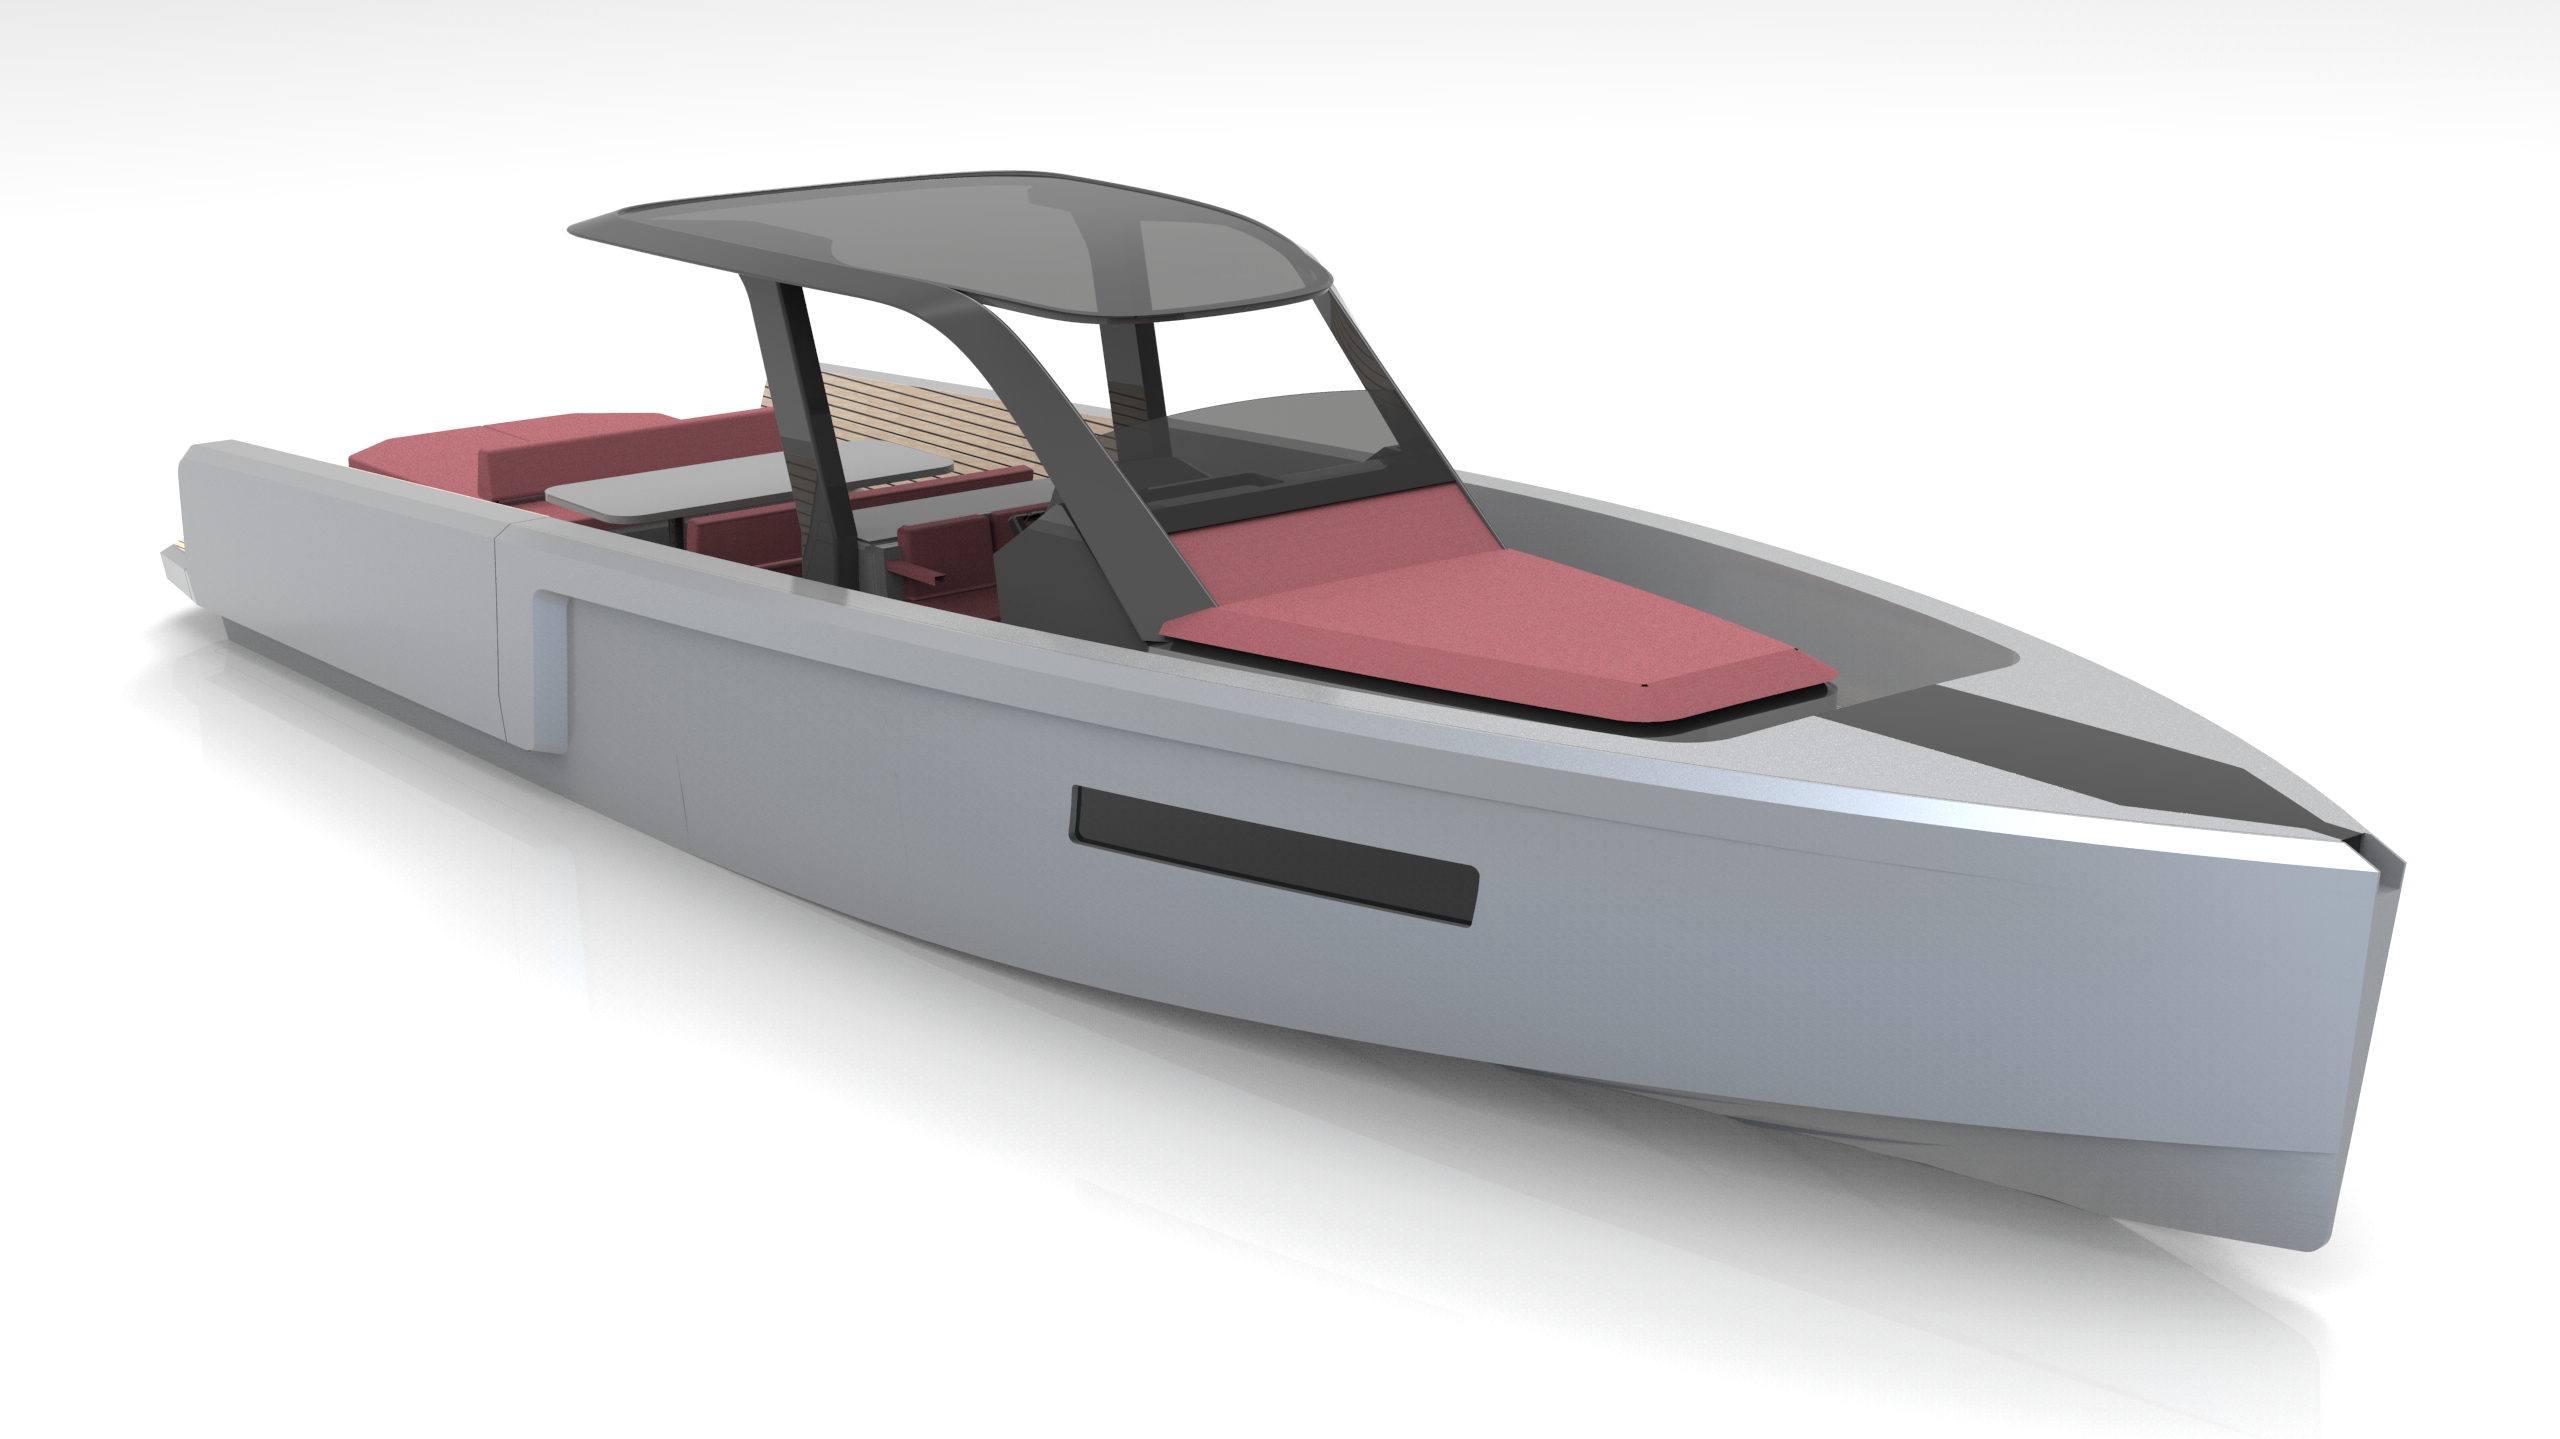 SwissCraft 12m - Yacht Design Collective